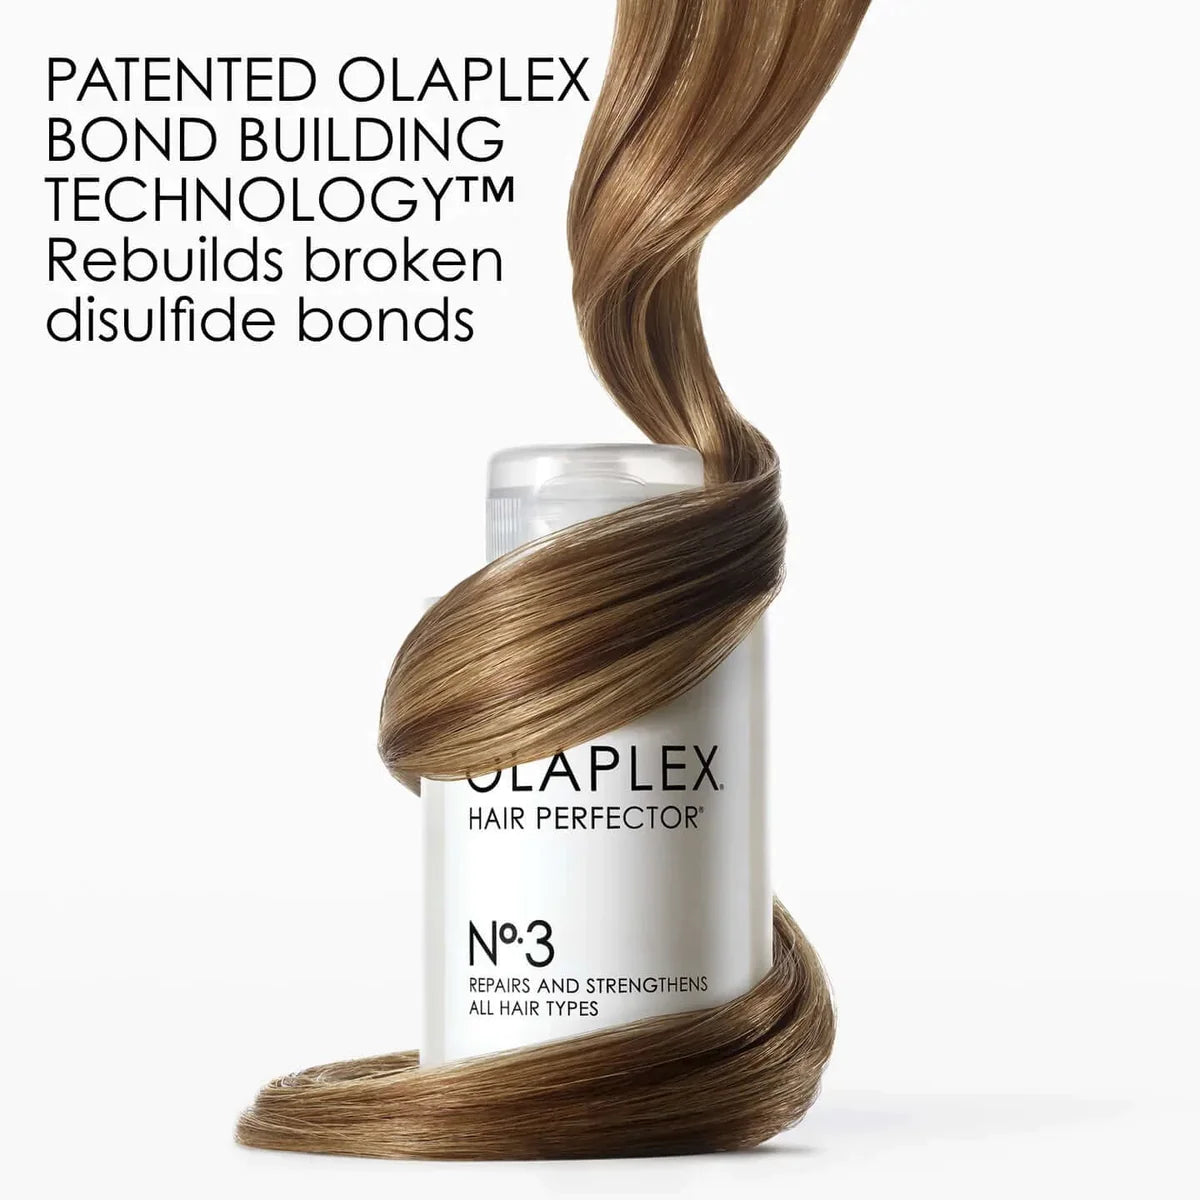 Эликсир для волос "Совершенство волос" Olaplex (Olaplex Hair Protector №.3)